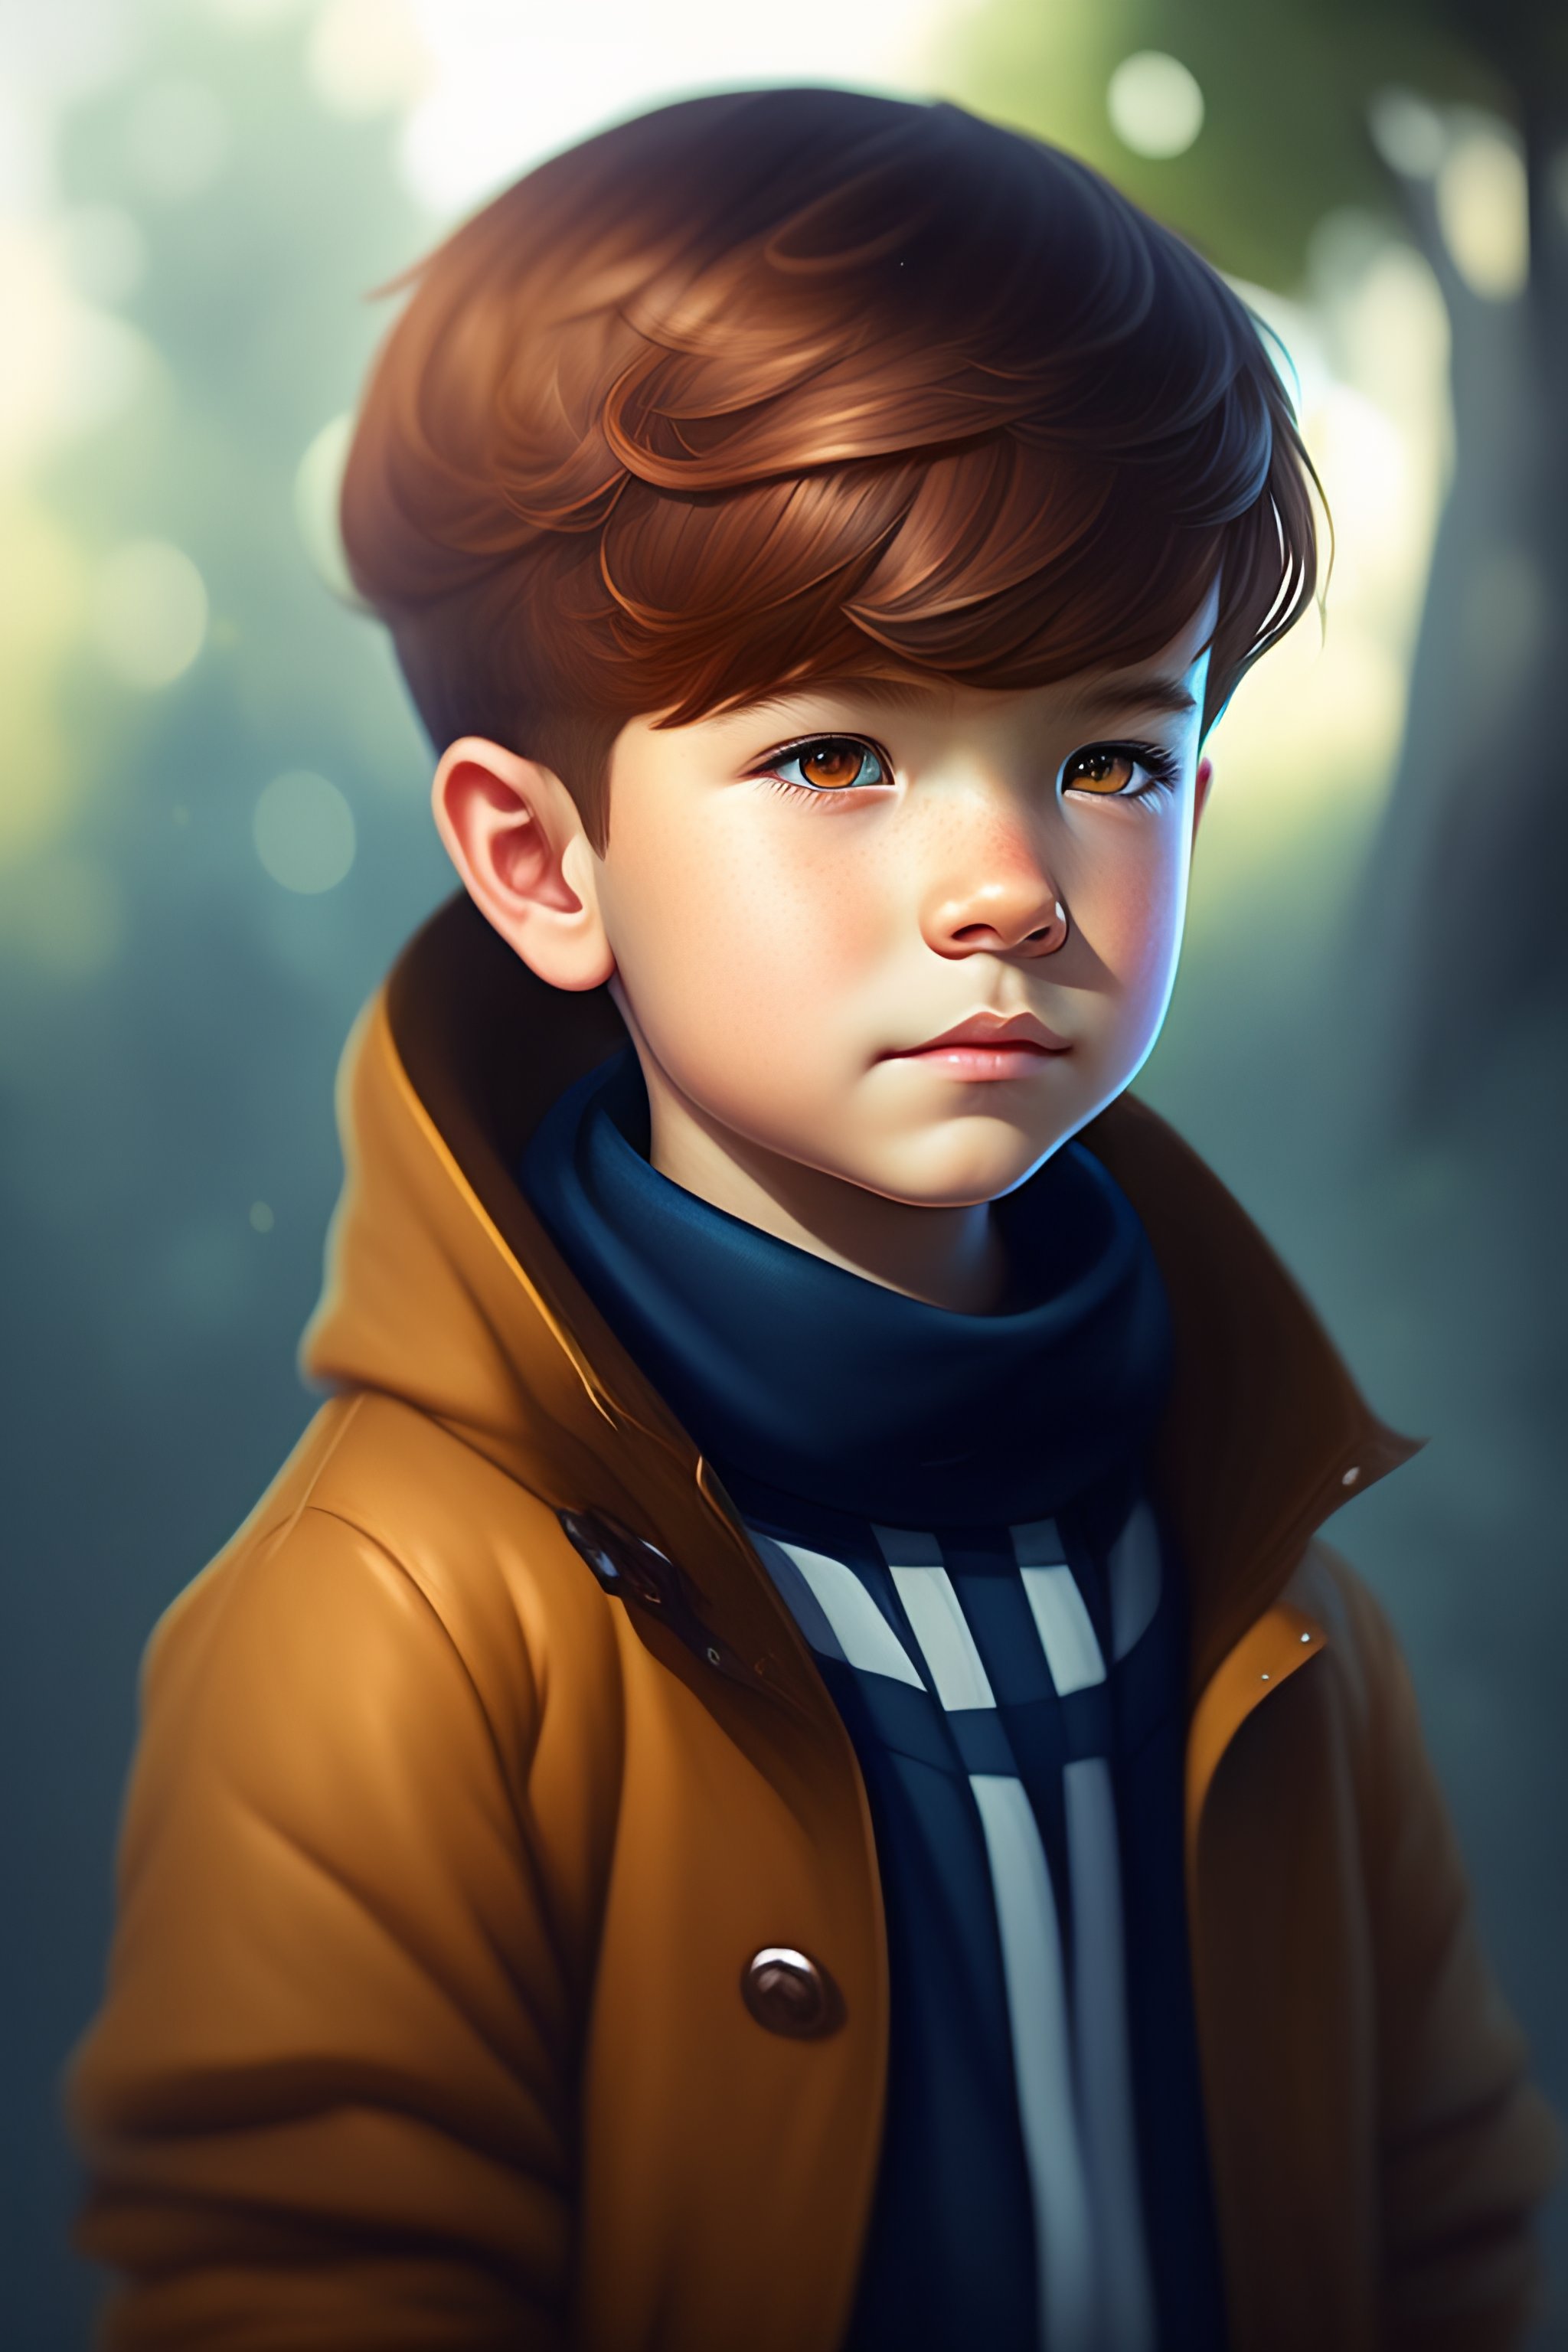 little boy with light brown hair